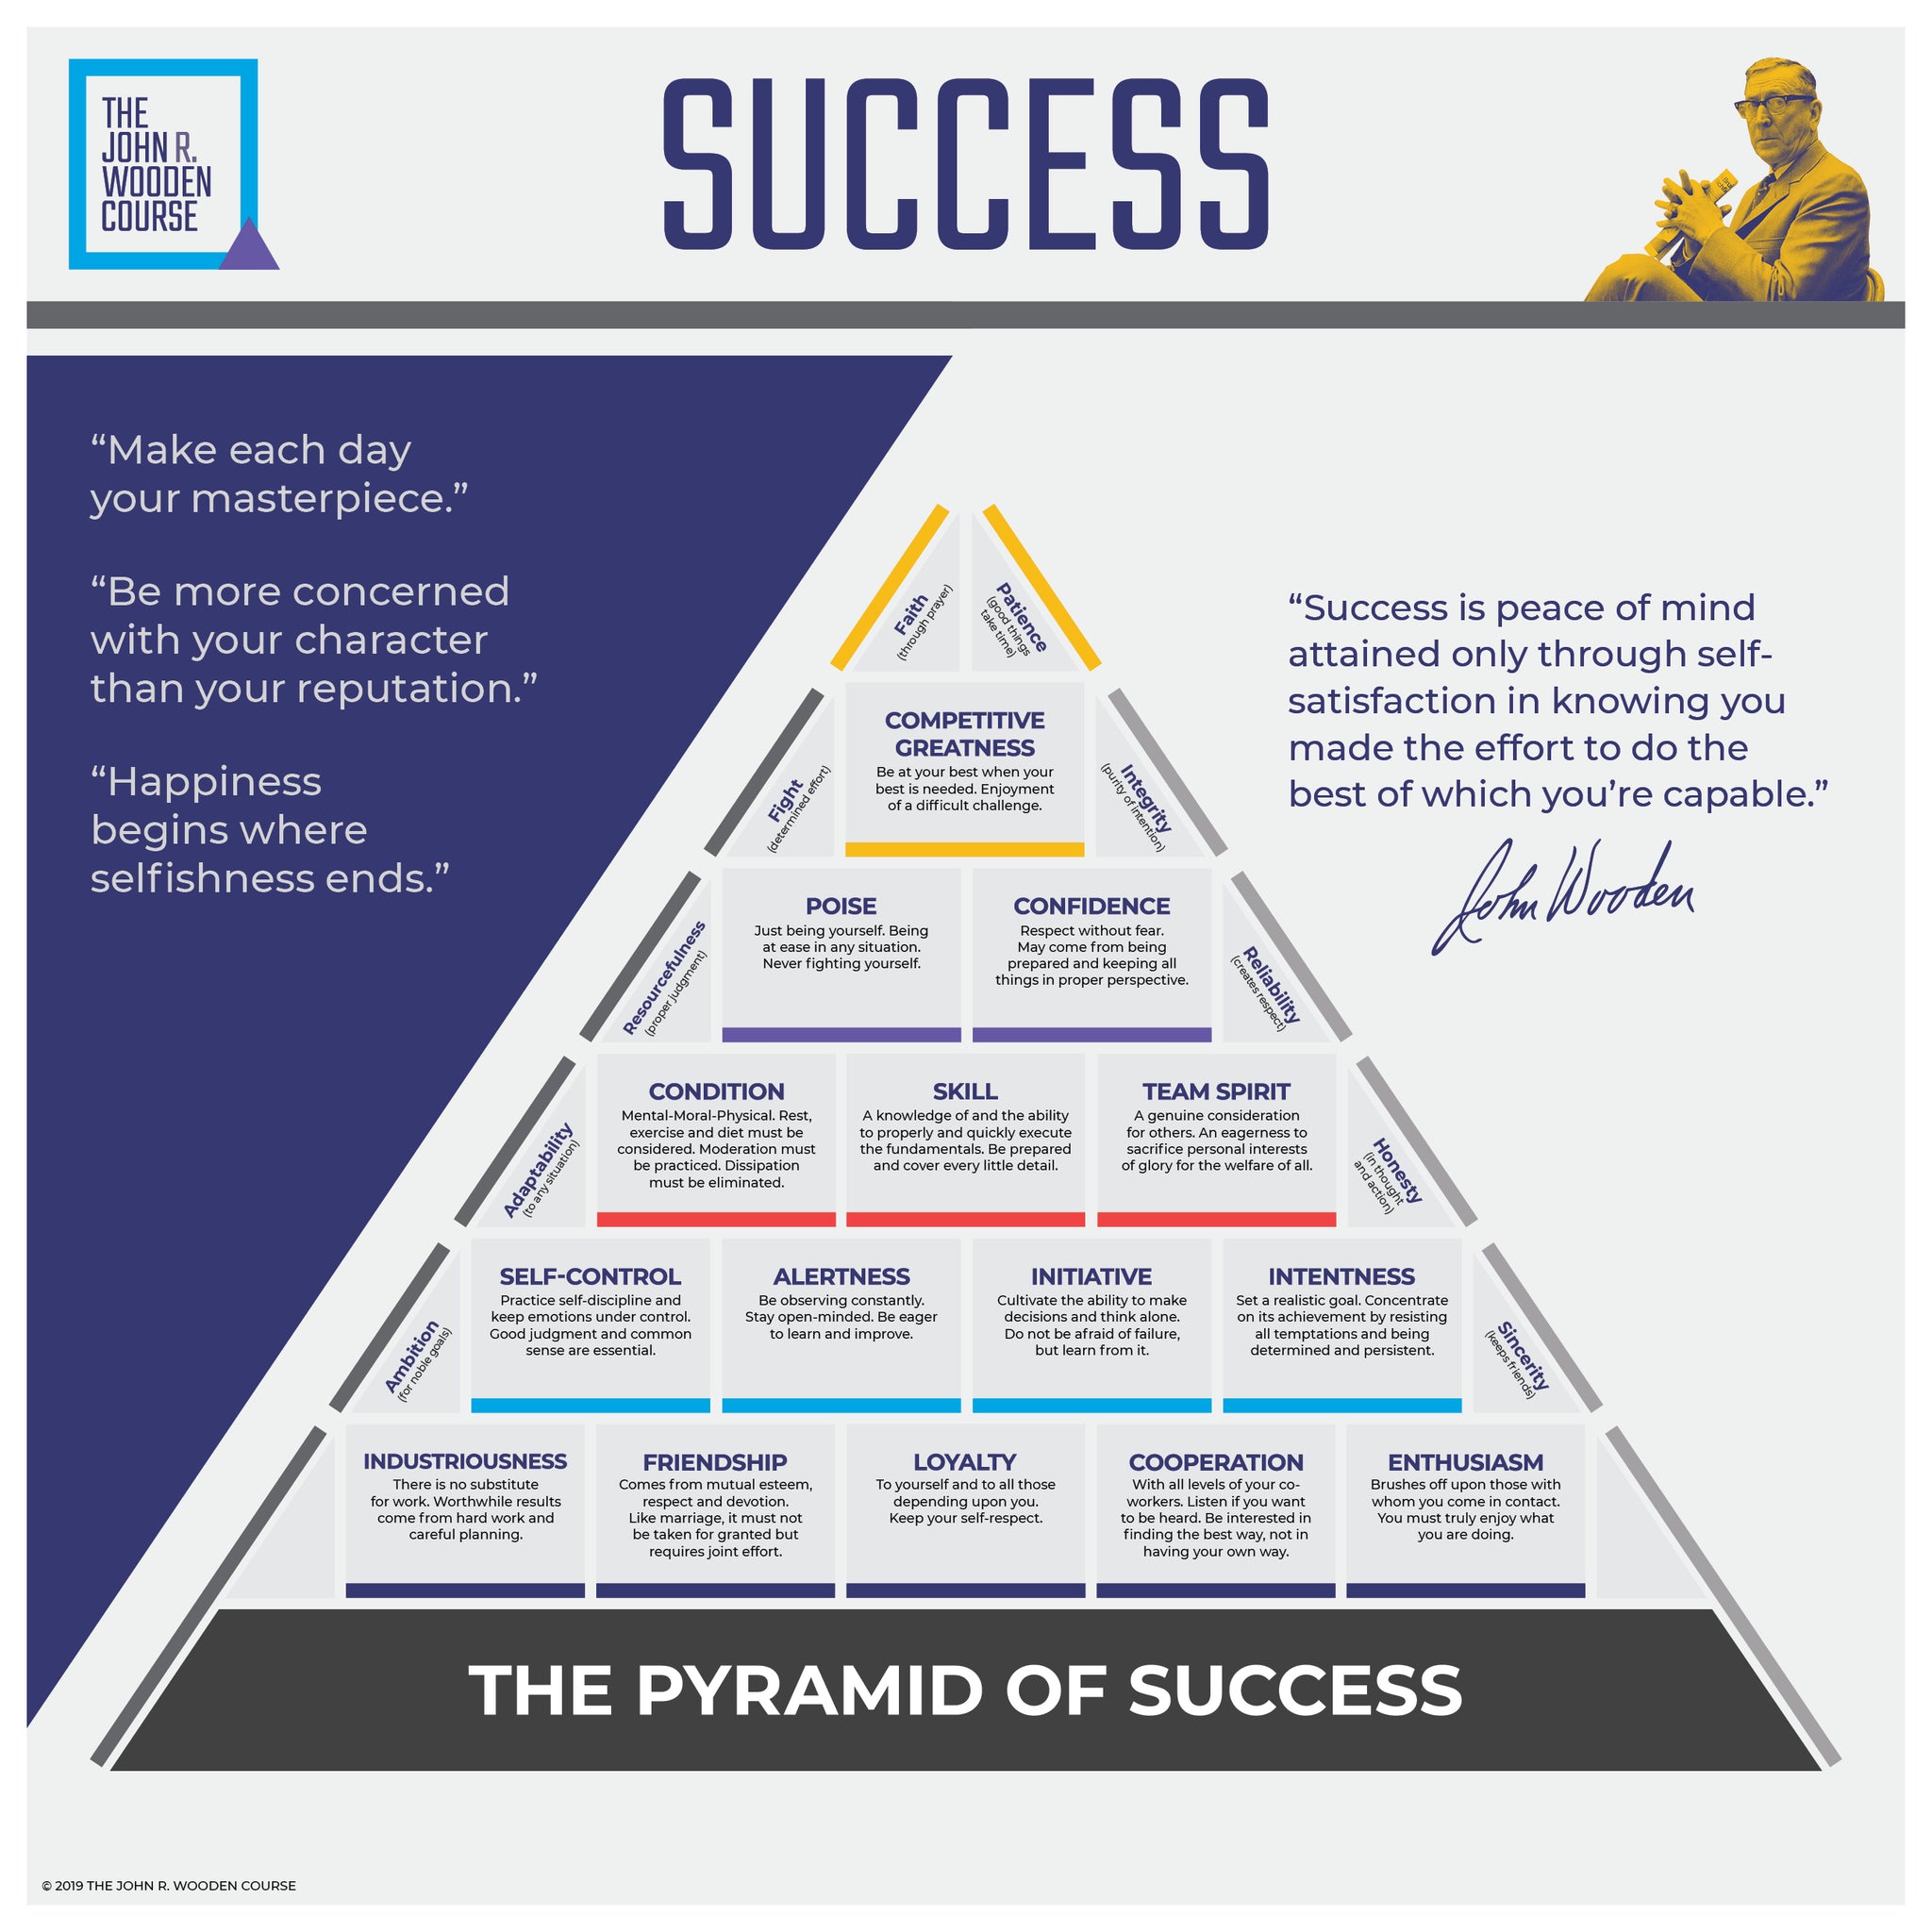 John R. Wooden Pyramid of Success fathead wall poster